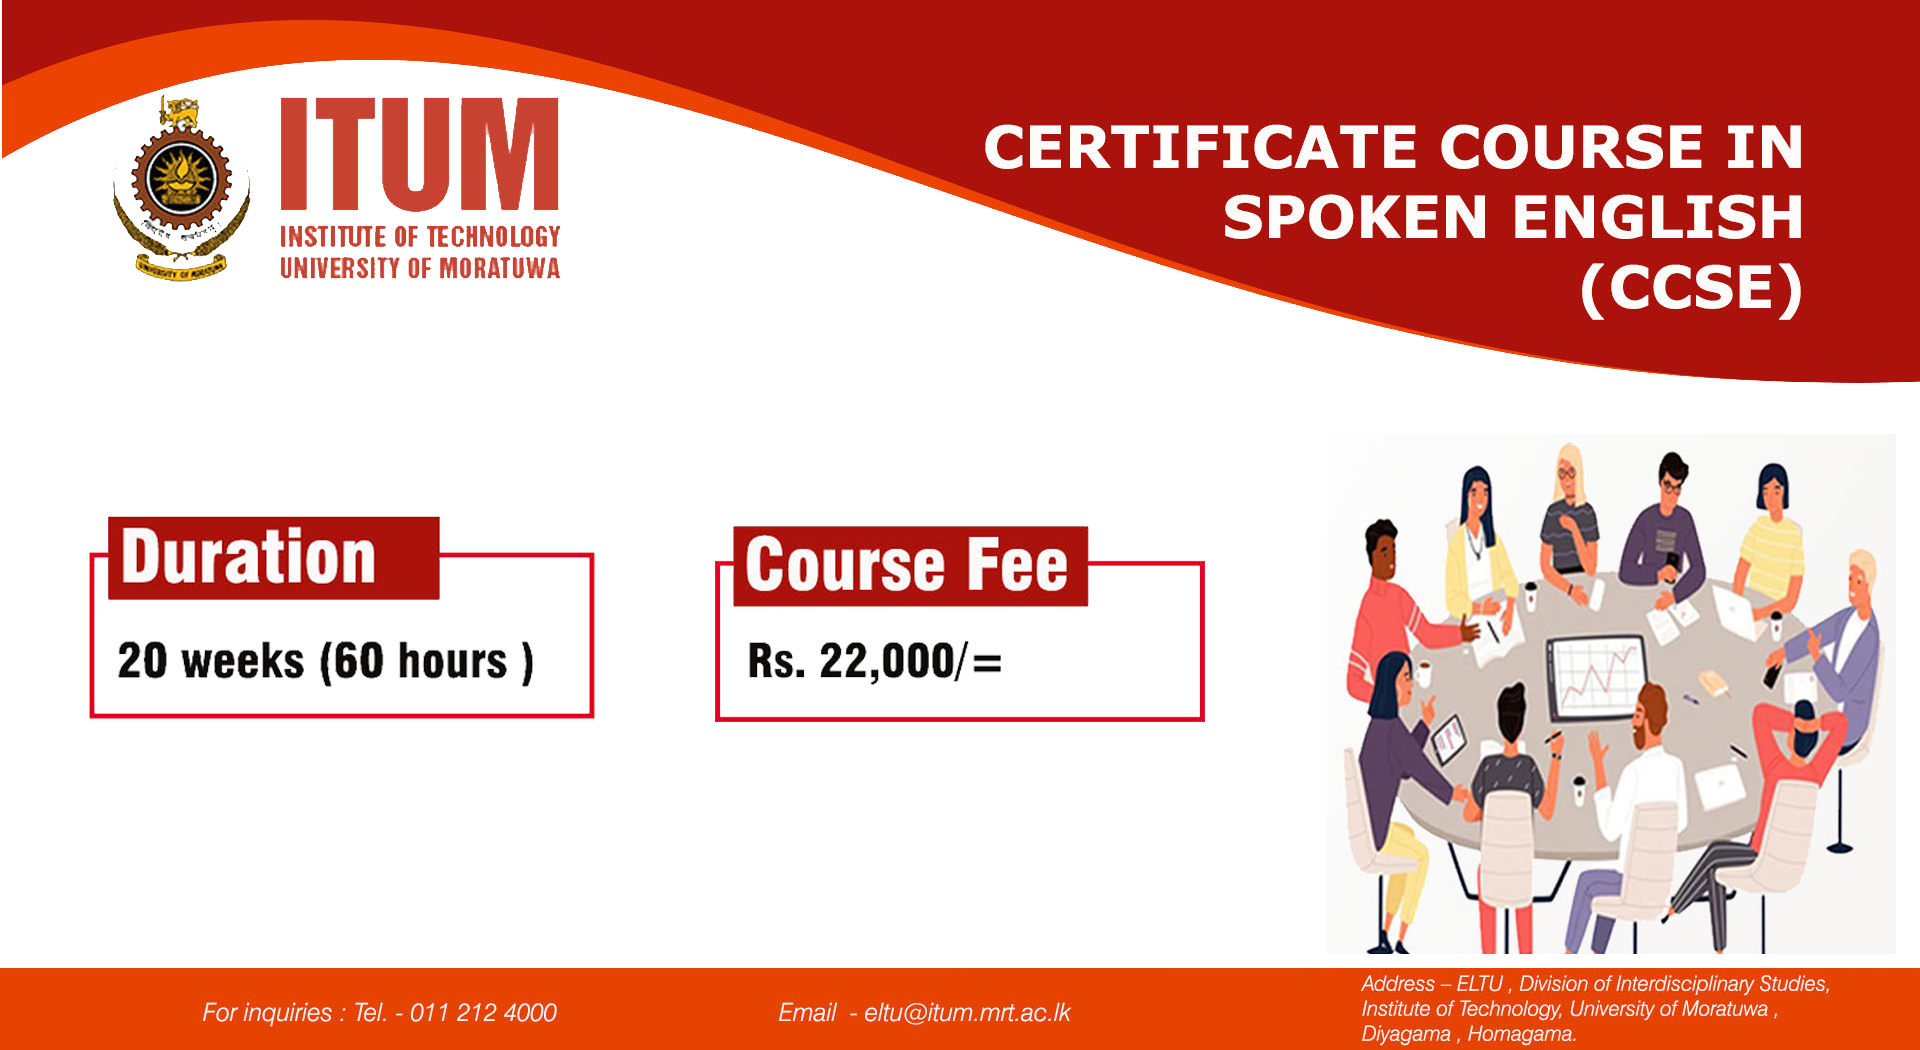  Certificate Course in Spoken English (CCSE)